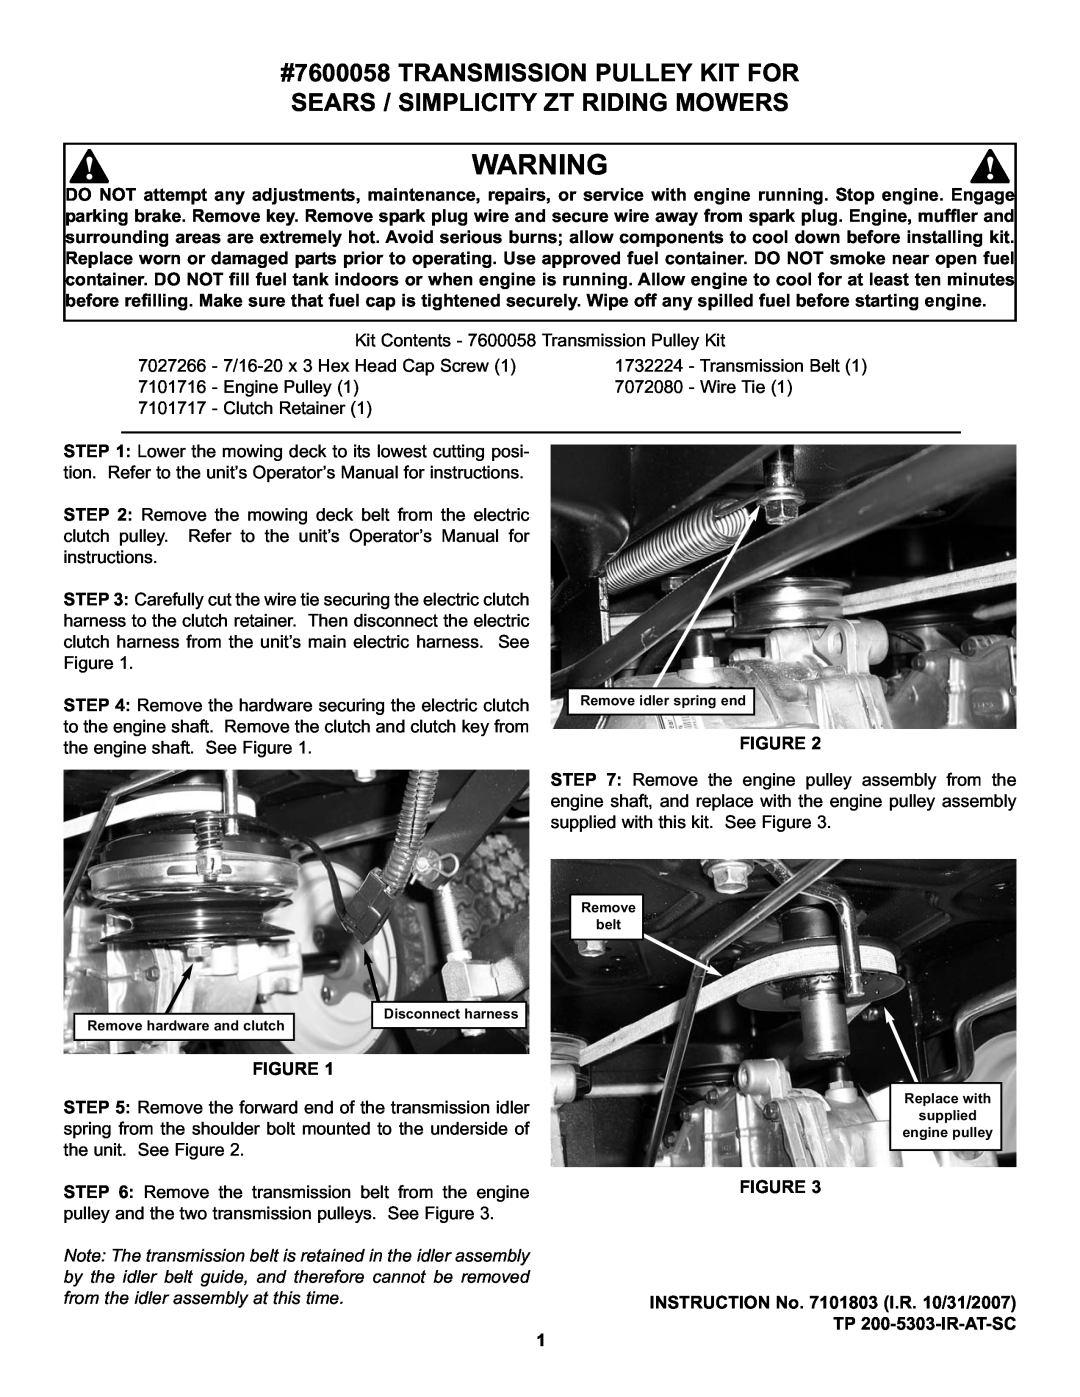 Sears 7600058 manual INSTRUCTION No. 7101803 I.R. 10/31/2007 TP 200-5303-IR-AT-SC 